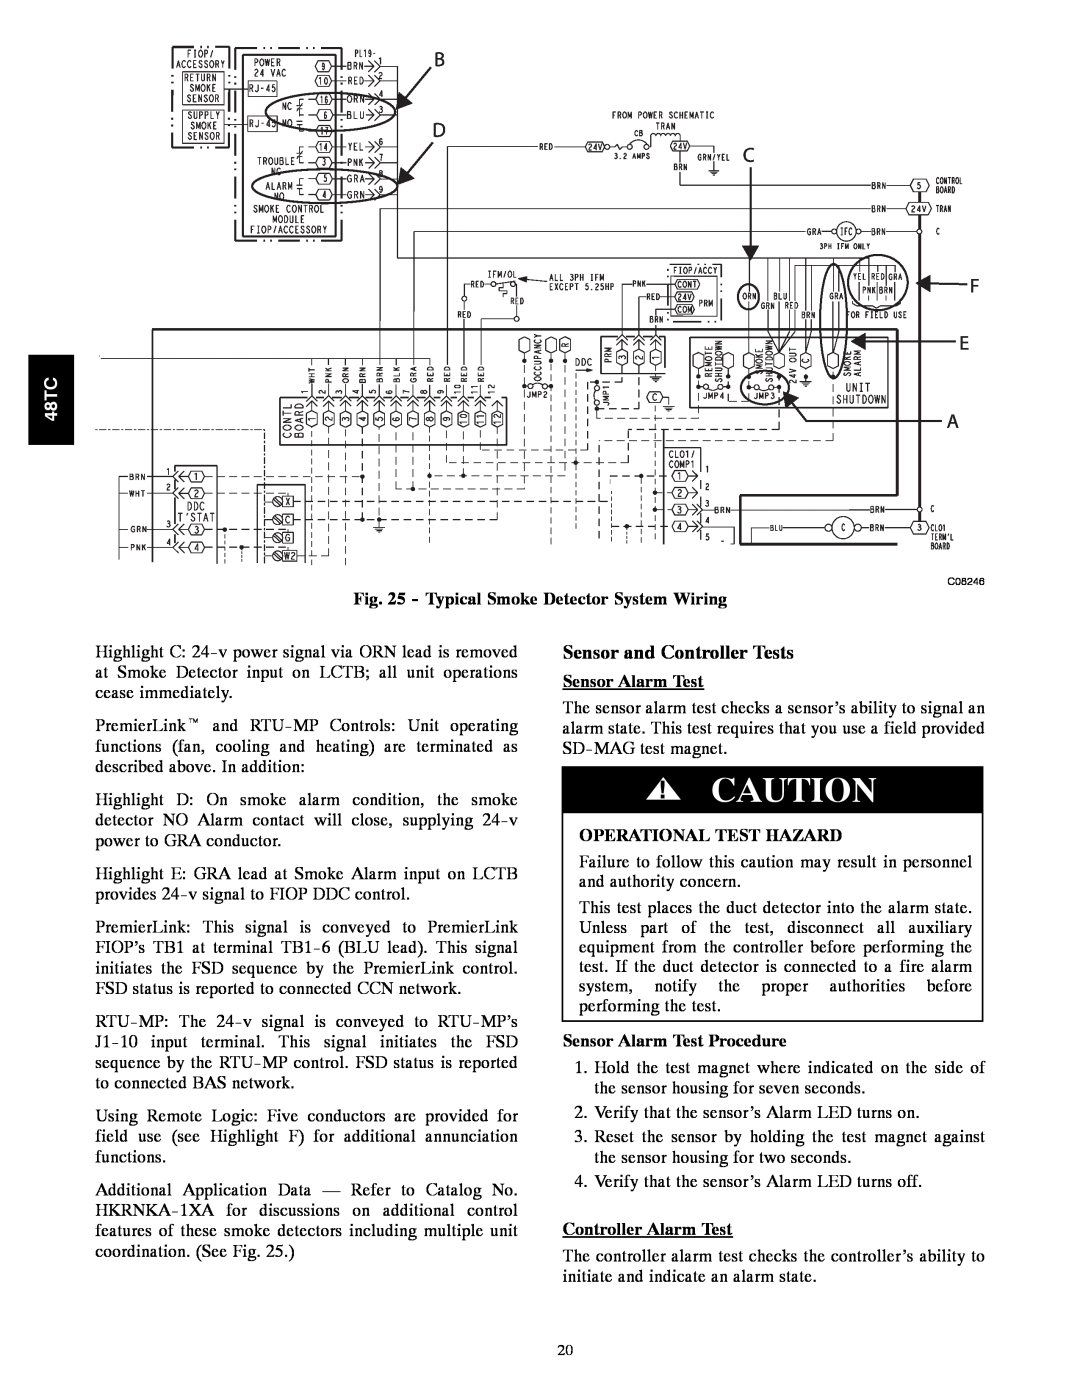 Carrier 48TC*D08 appendix Sensor and Controller Tests, Typical Smoke Detector System Wiring, Sensor Alarm Test, B D C F E A 